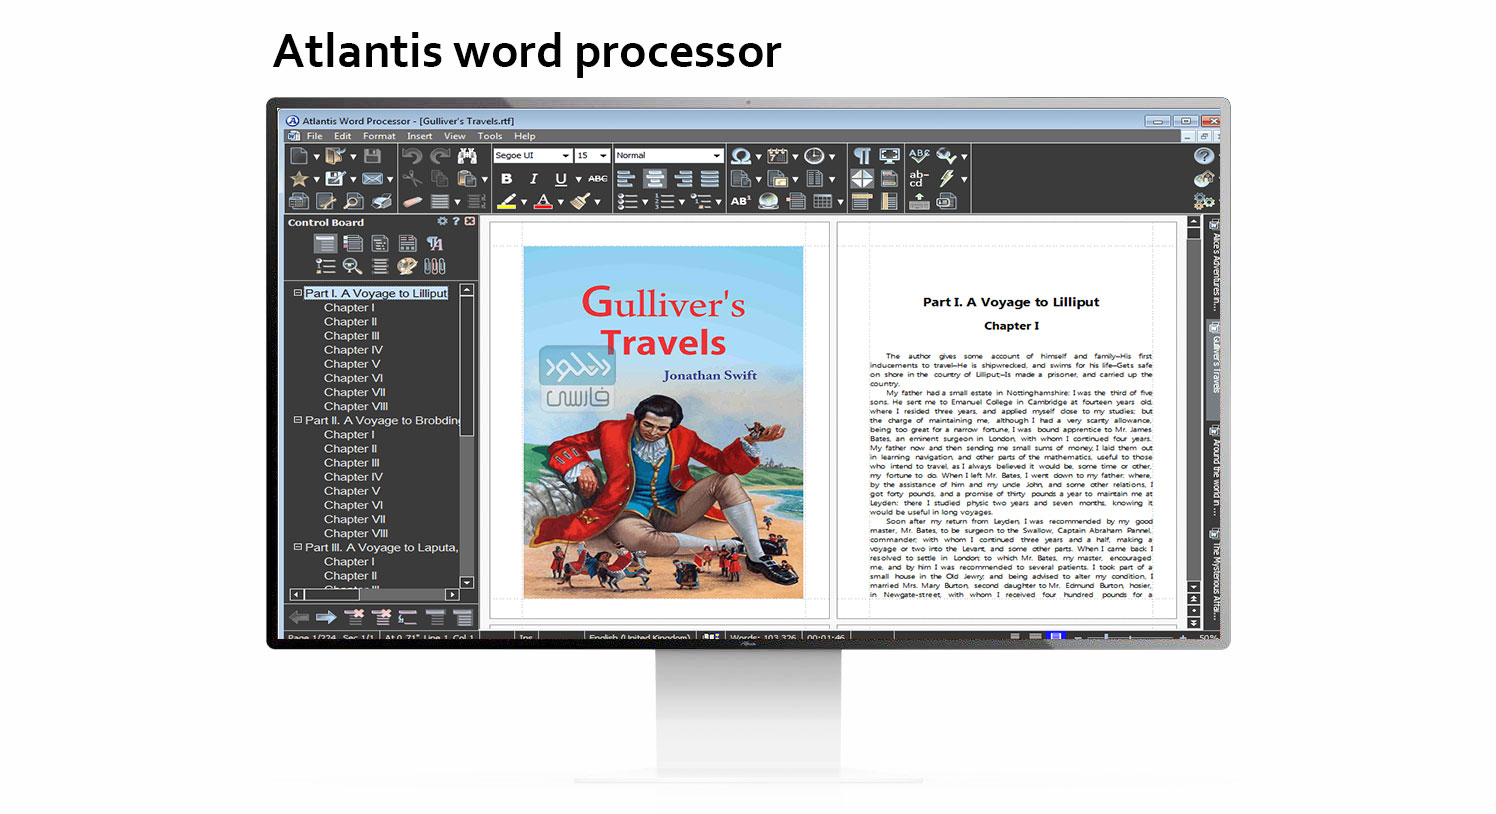 Atlantis Word Processor 4.3.4 free instal